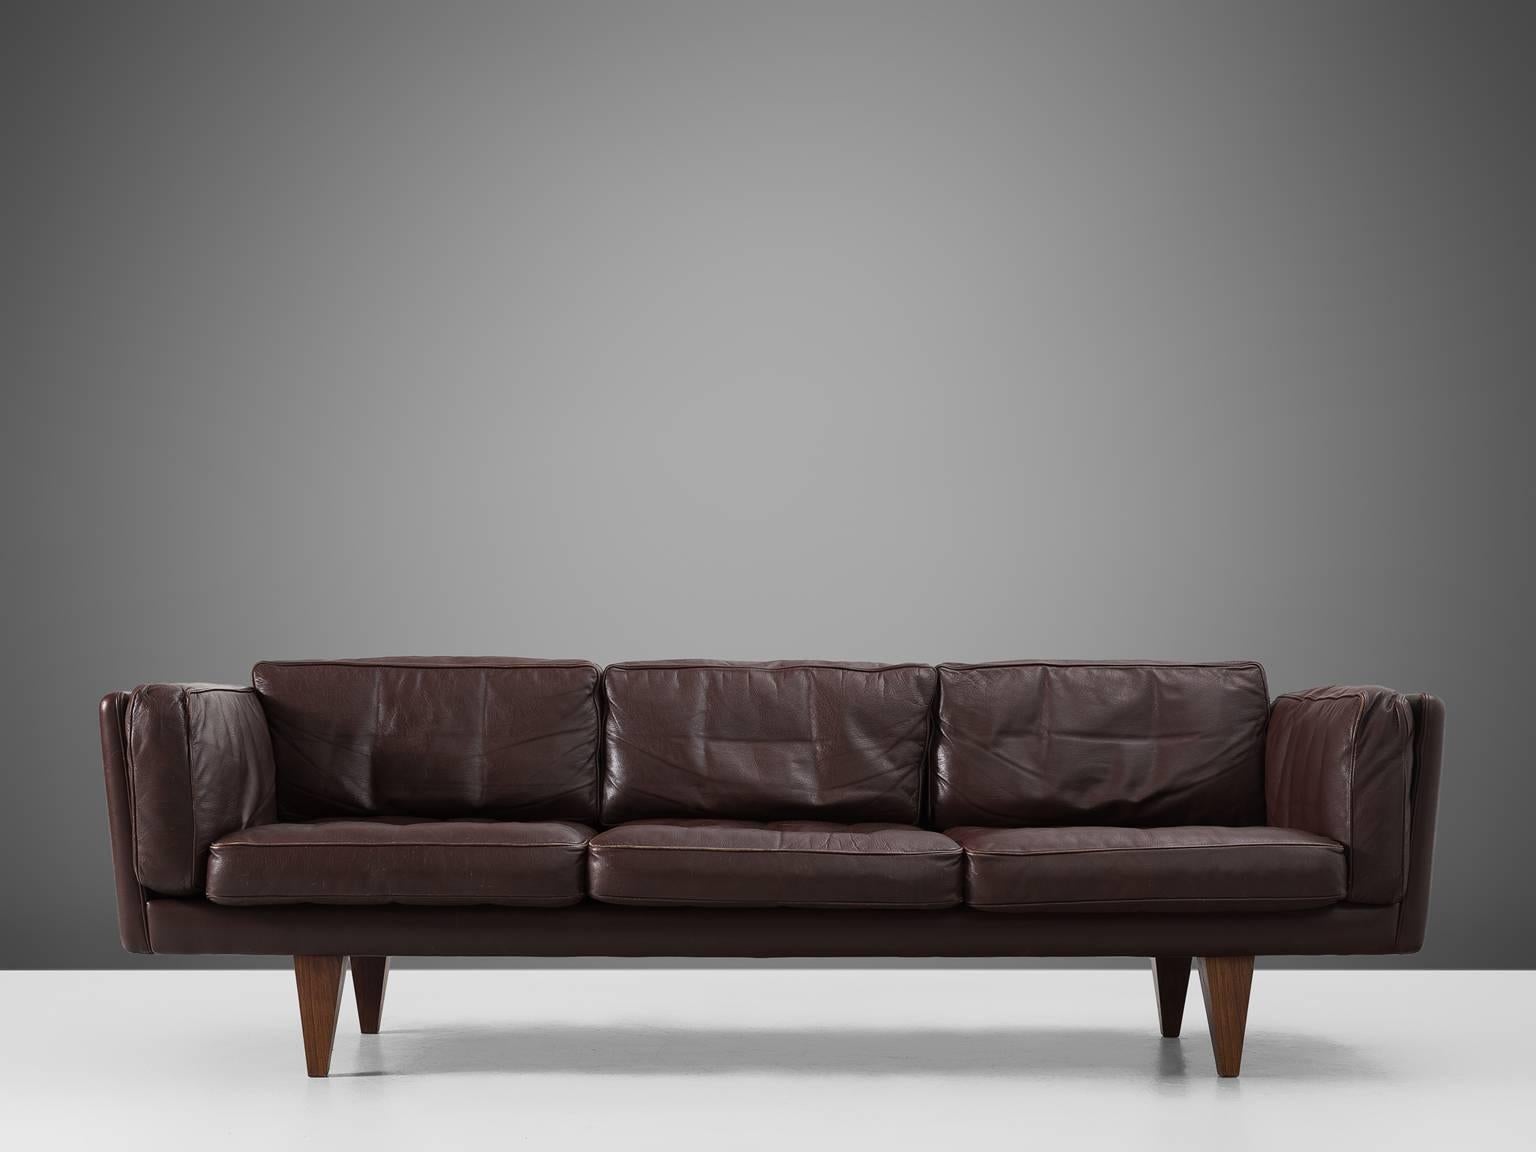 Illum Wikkelsø, sofa model V11, brown leather and wood, Denmark, 1960s.

Stunningly three-seat sofa, designed by Danish designer Illum Wikkelsø. Highly comfortable and beautiful designed sofa with dark brown leather upholstery. The dark brown high